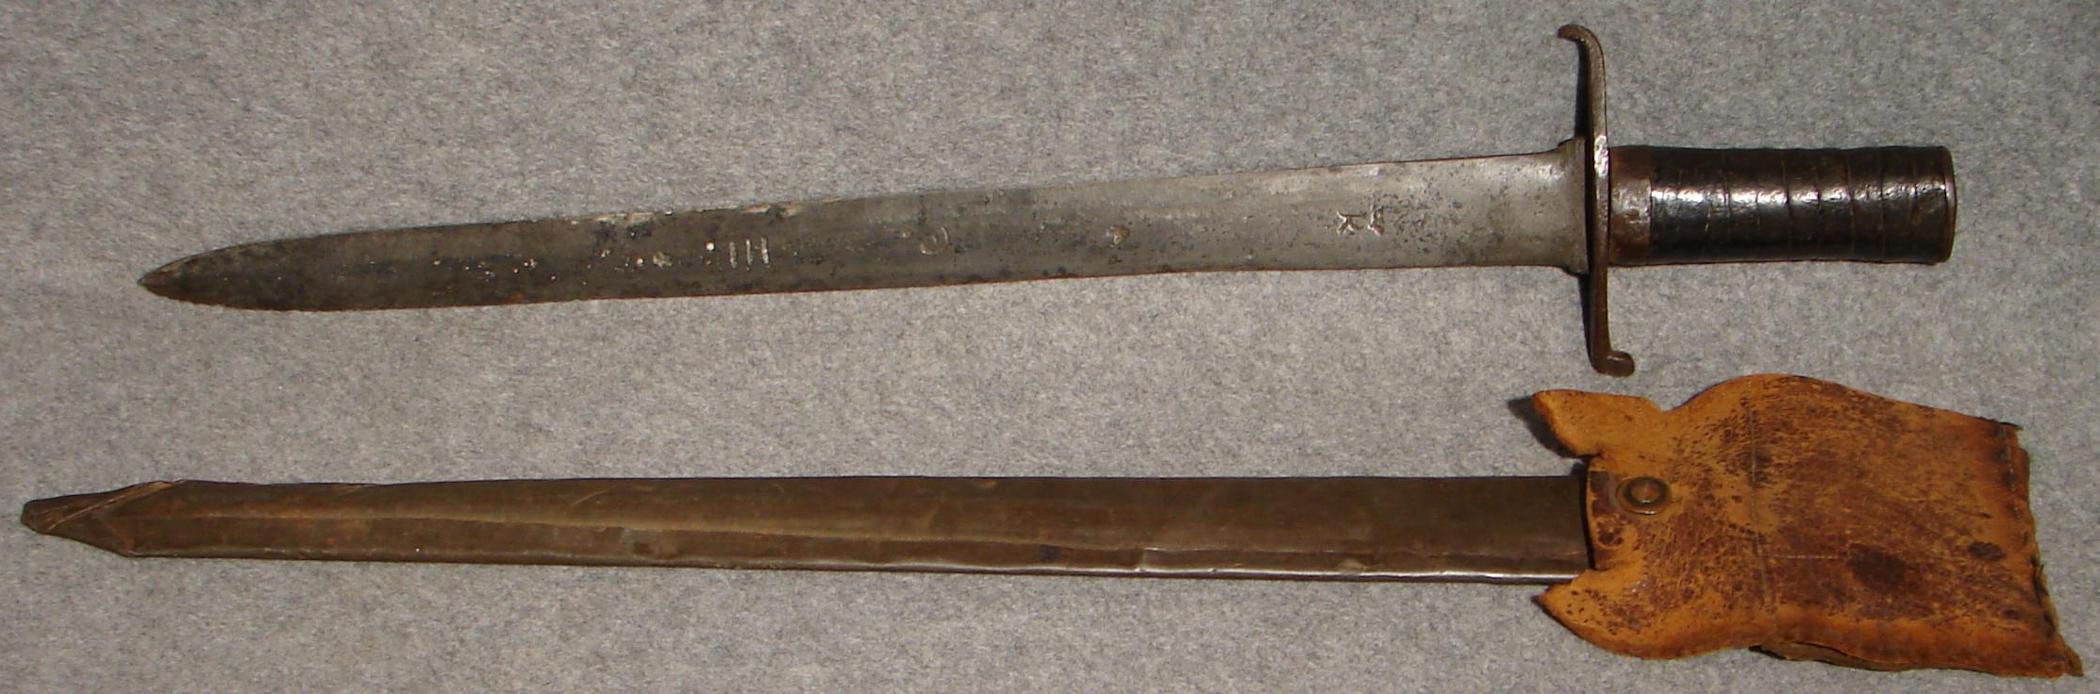 Sword-Short-1783-B-oa&scab.jpg